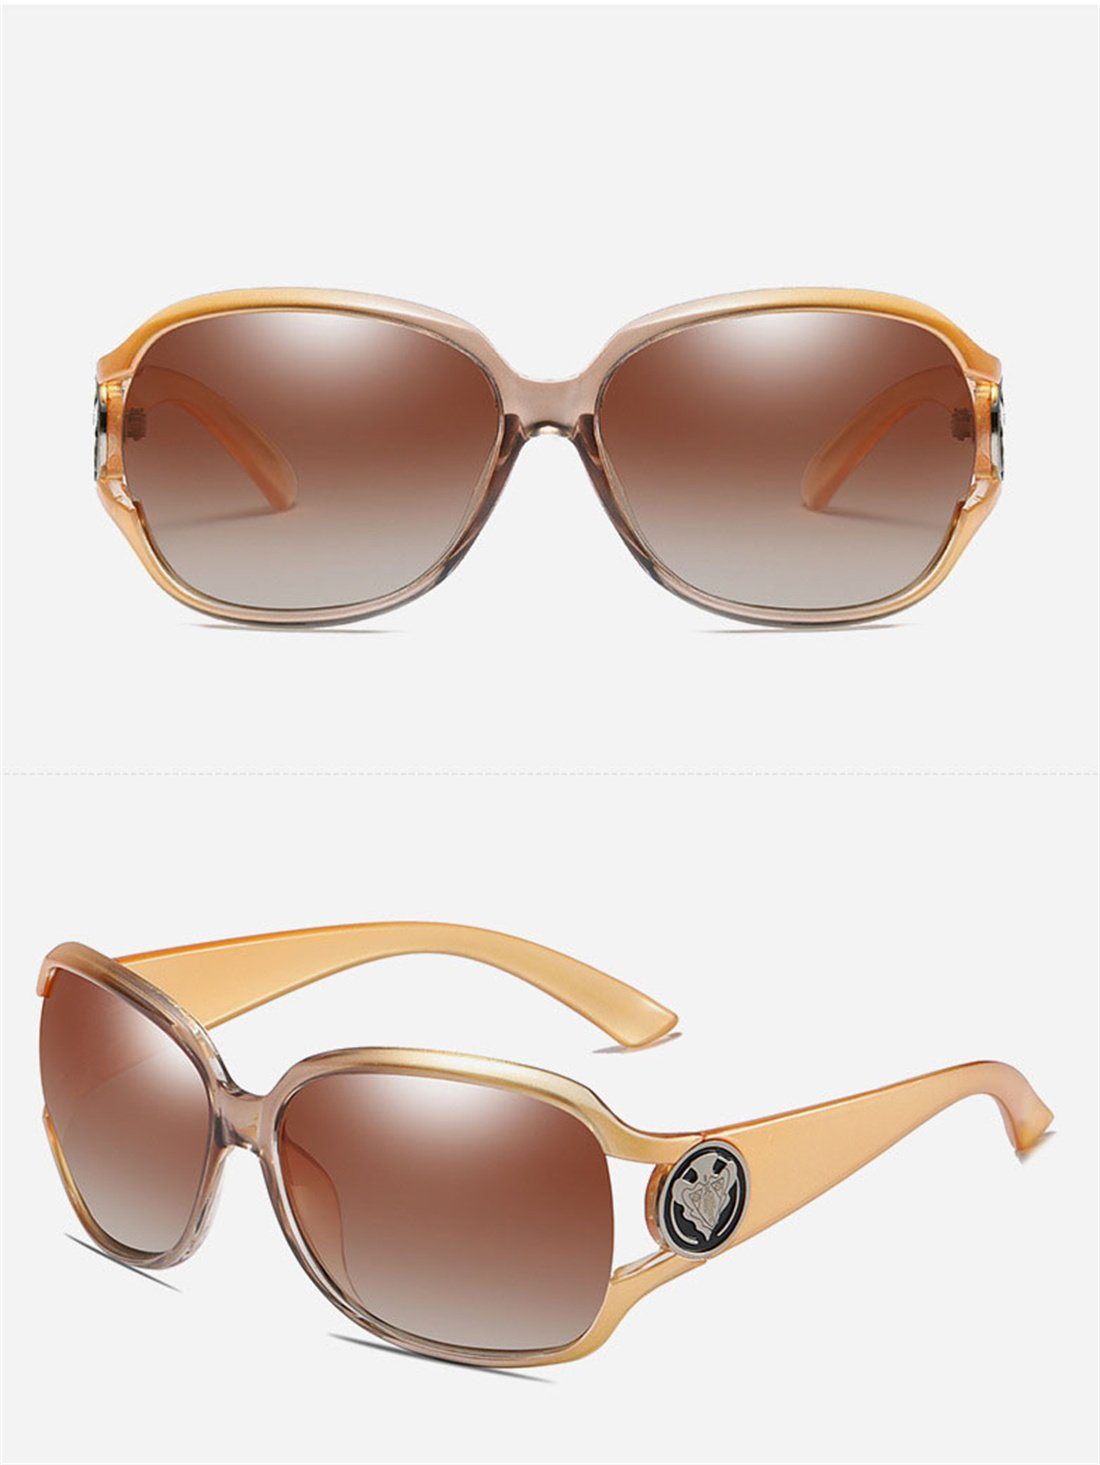 DÖRÖY Sonnenbrille Polarisierende Outdoor-Sonnenbrillen Frauen, für Sonnenbrillen